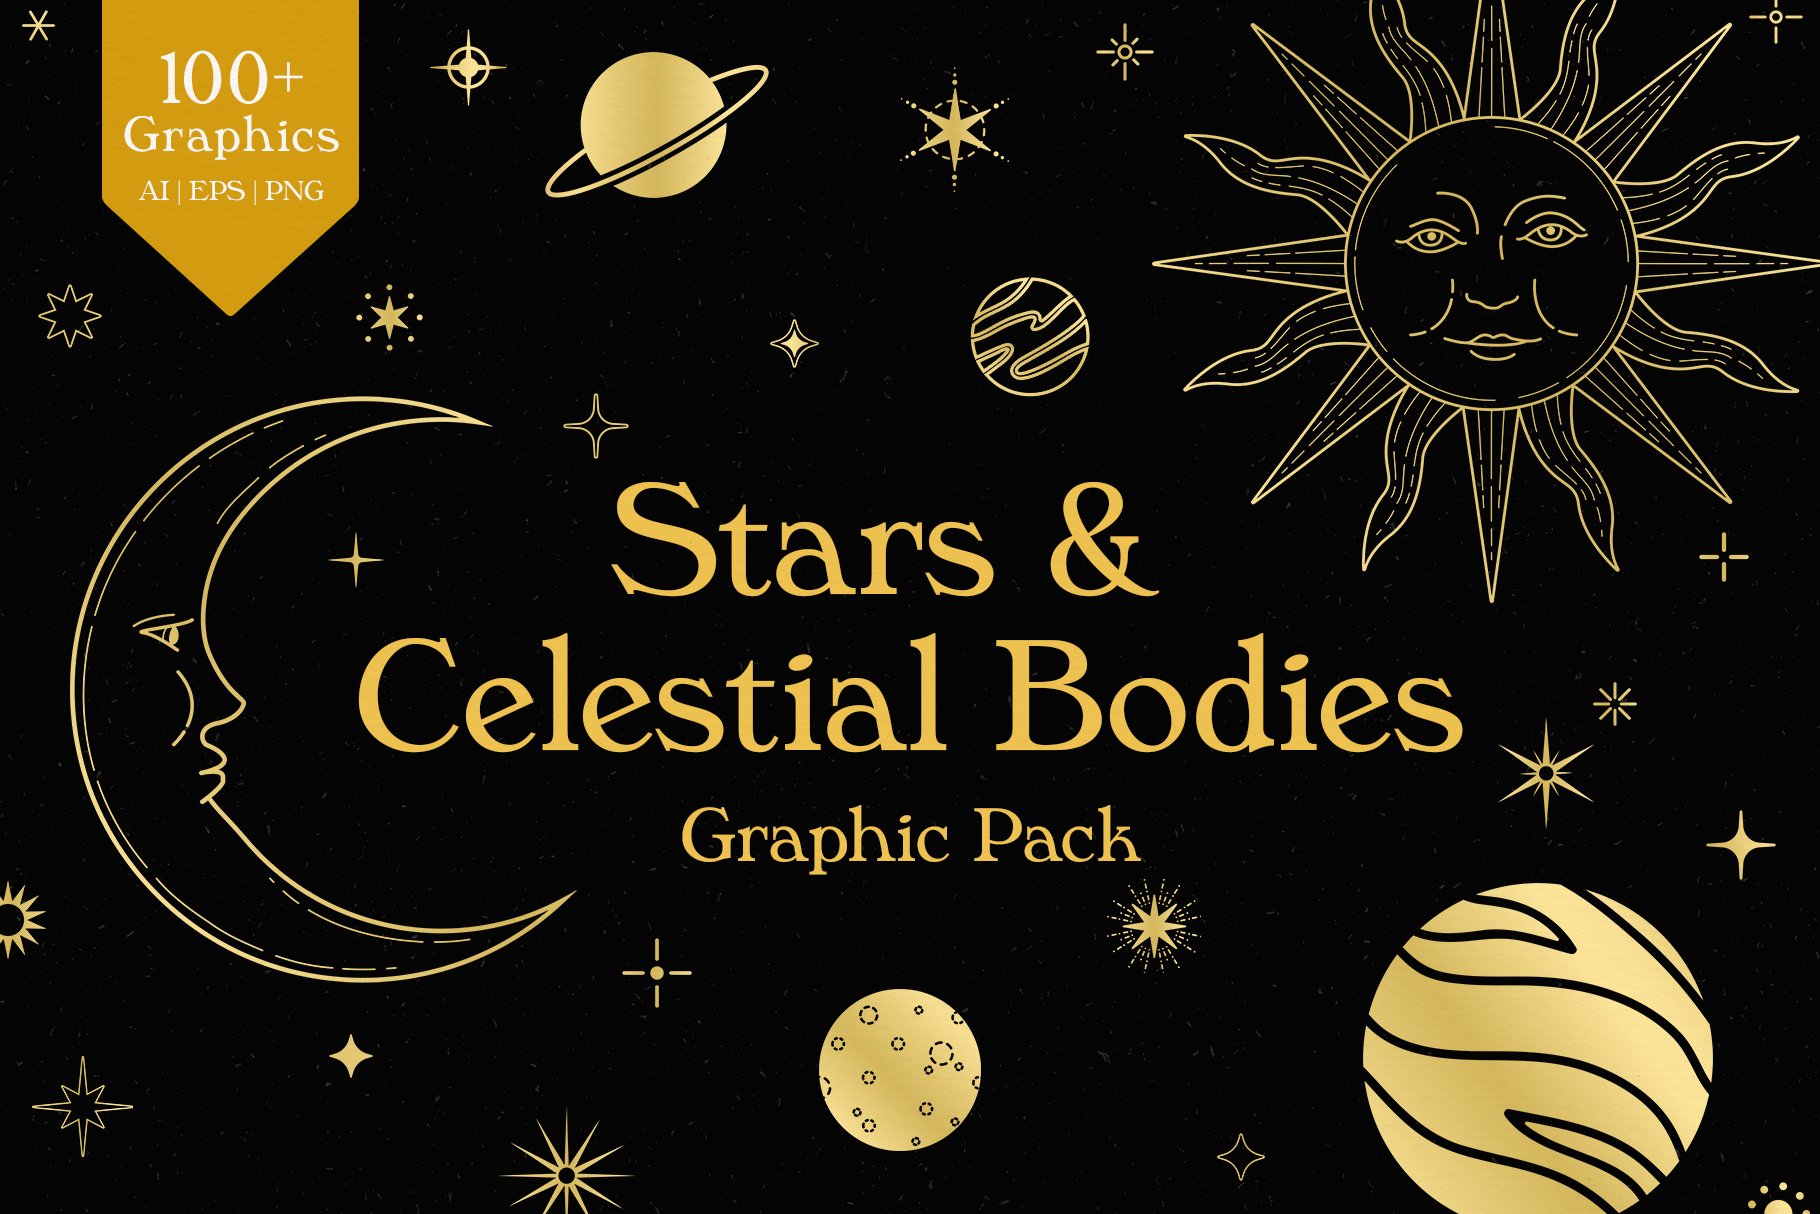 Stars & Celestial Bodies cover image.